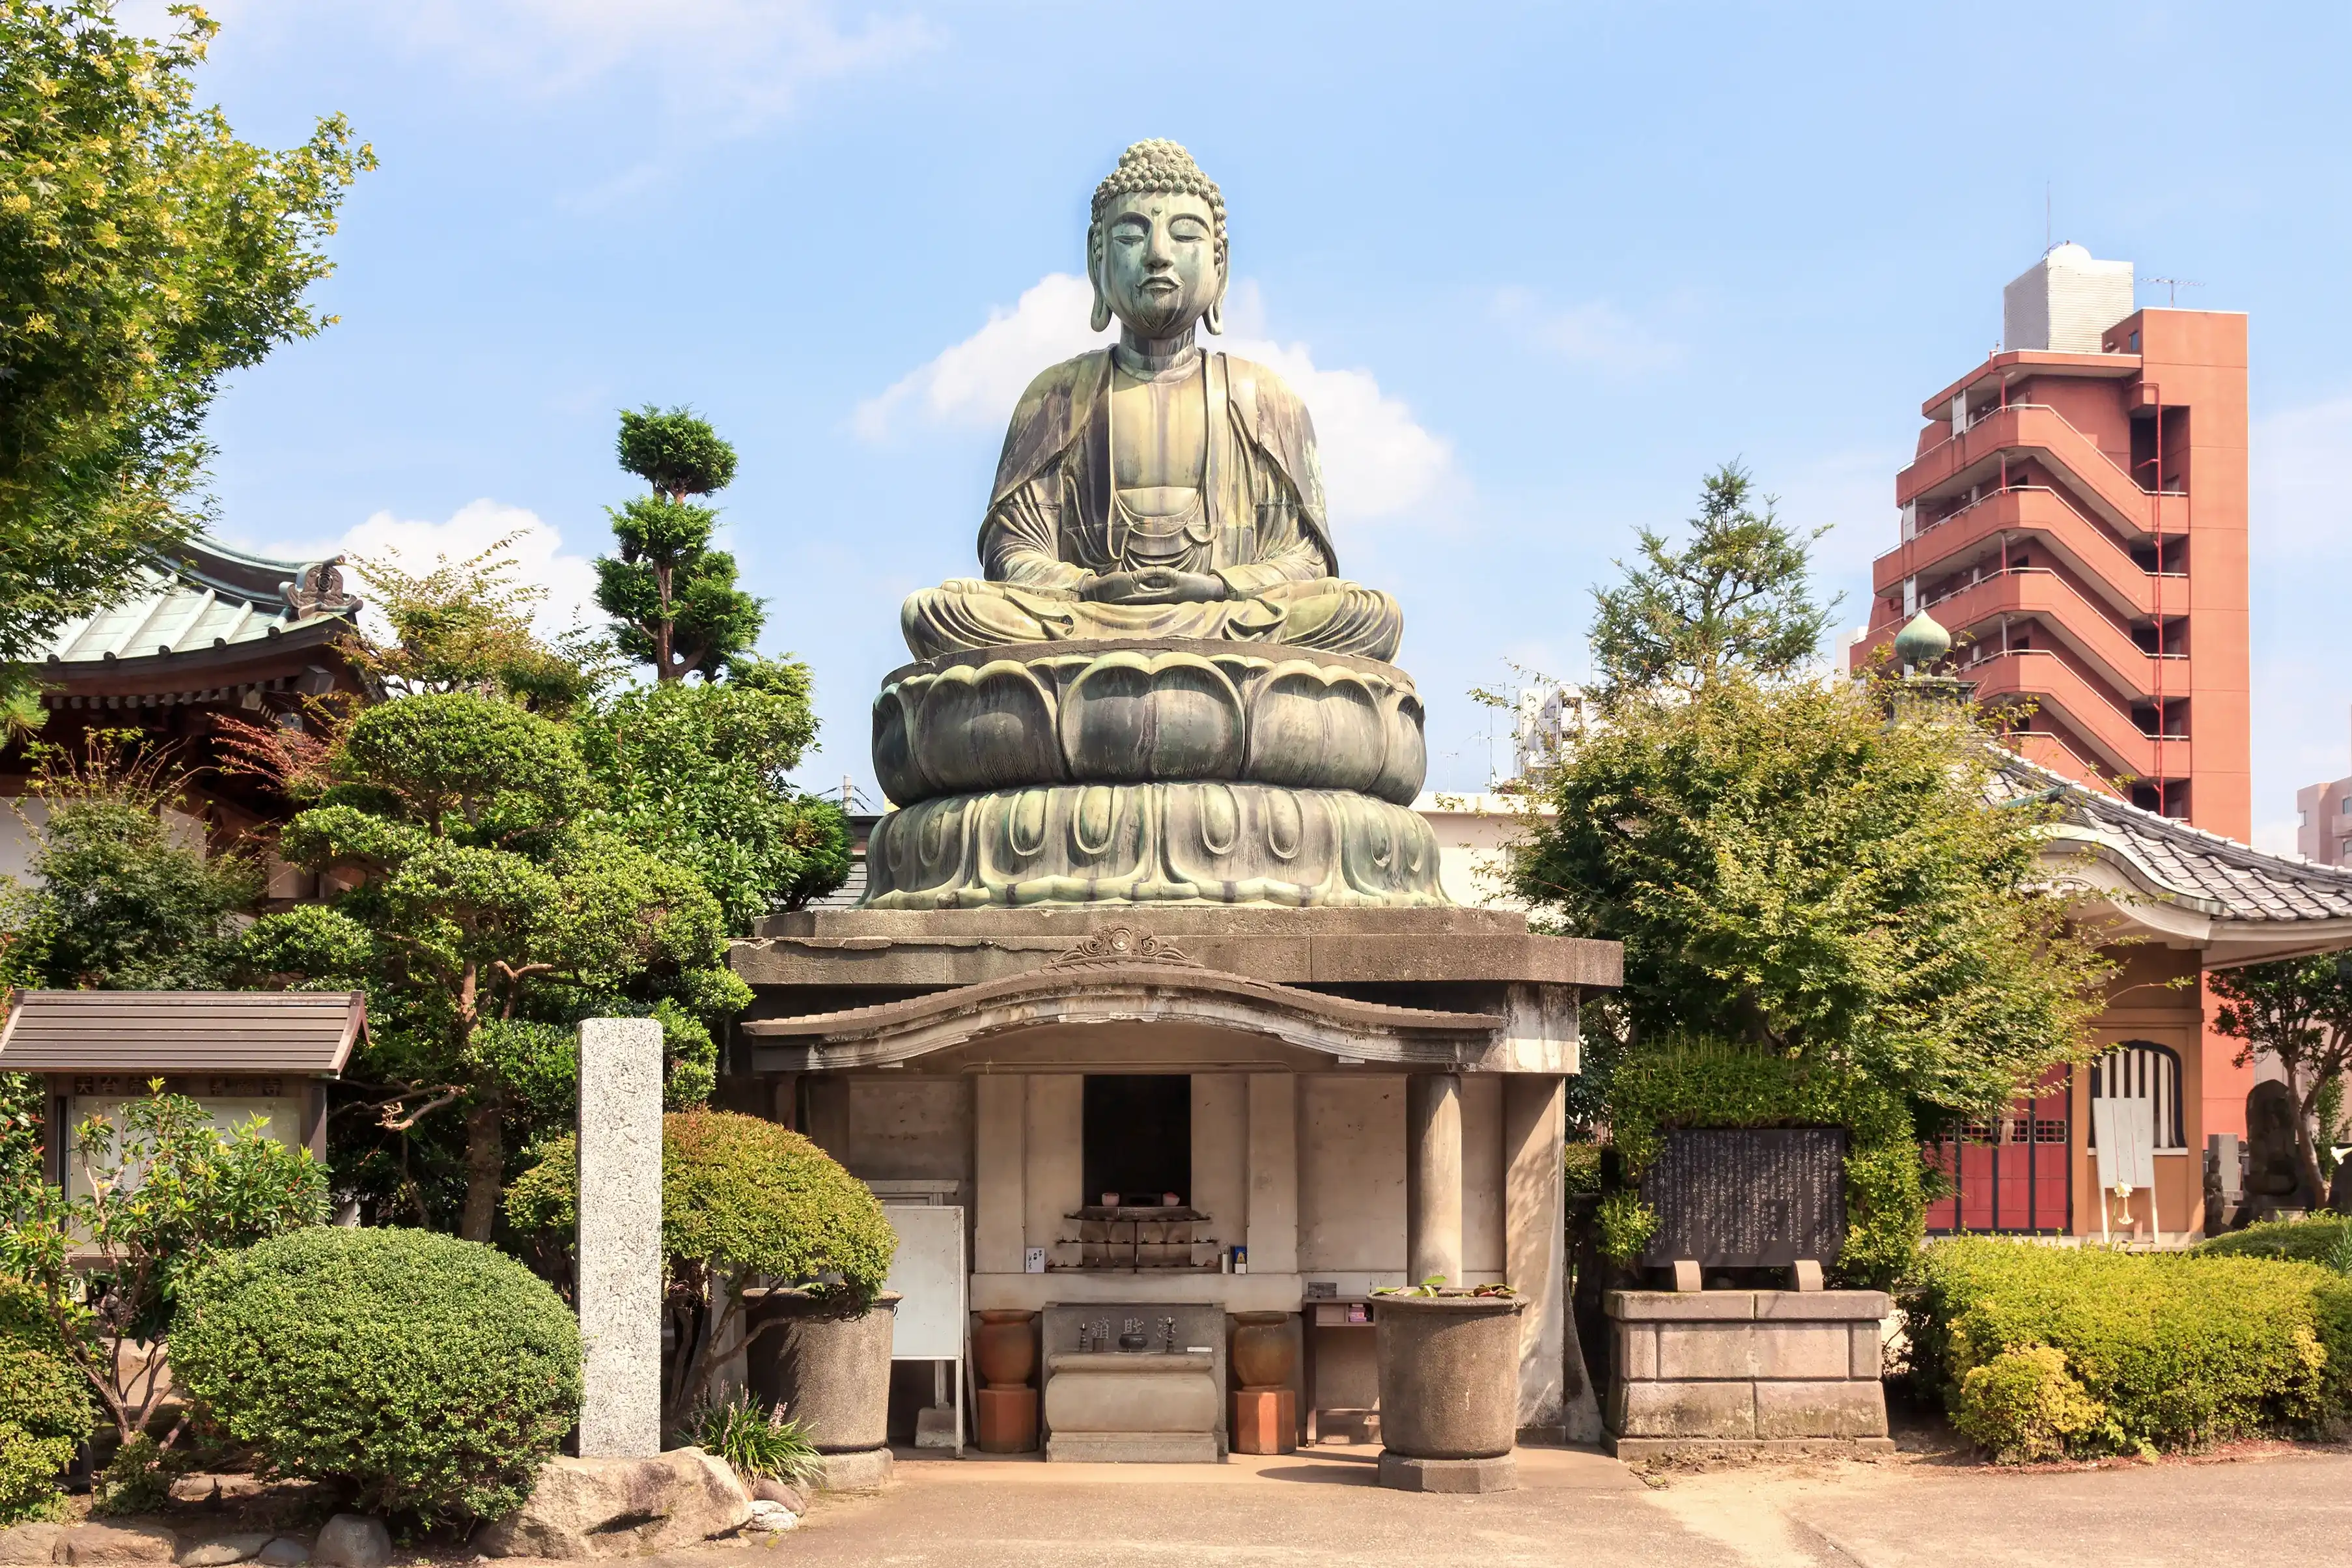 The Great Buddha of Utsunomiya - Japan